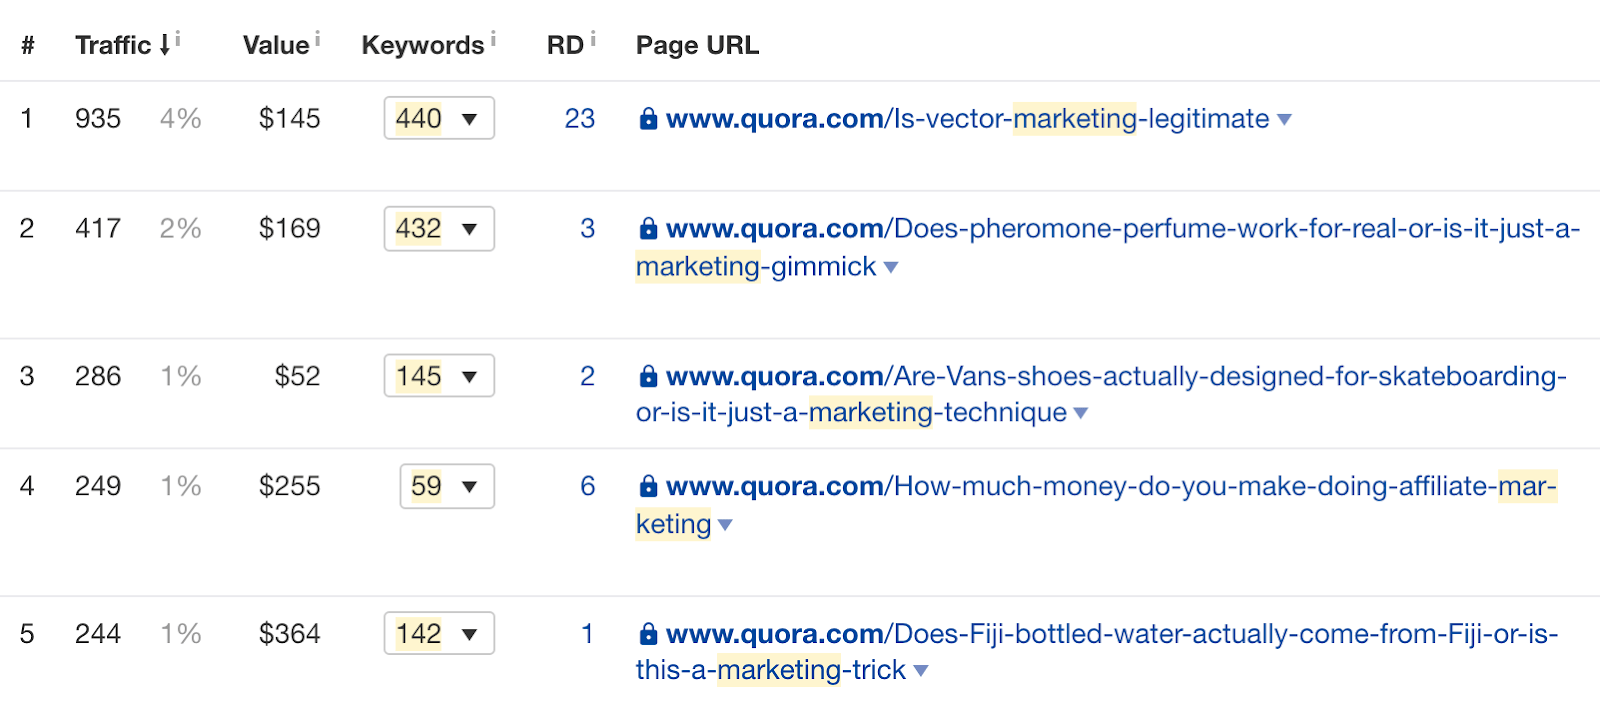 List of page URLs with corresponding data on traffic, keywords, etc 